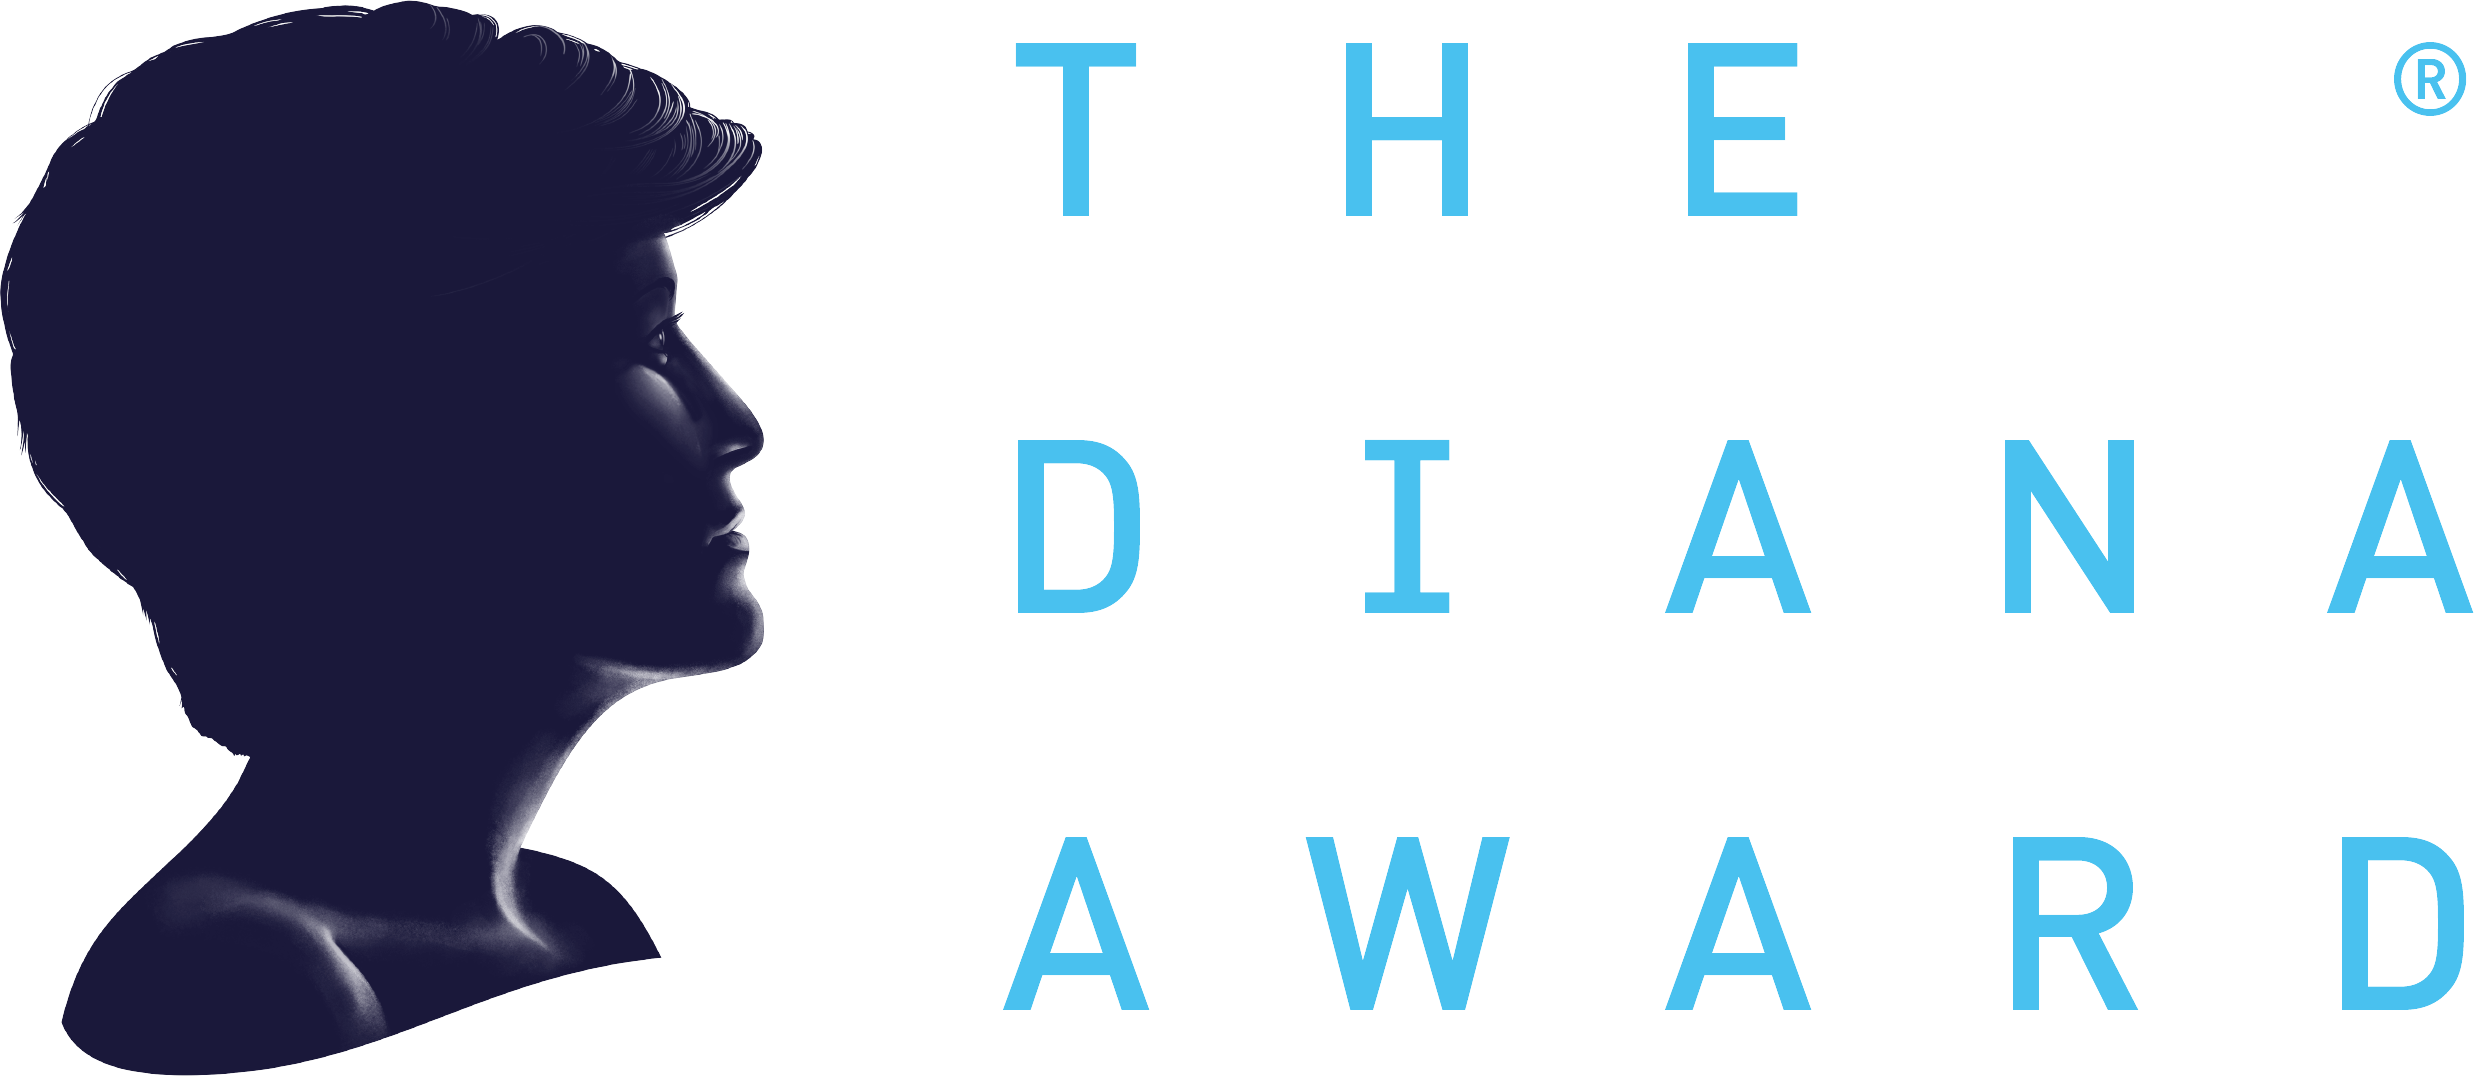 Diana Award